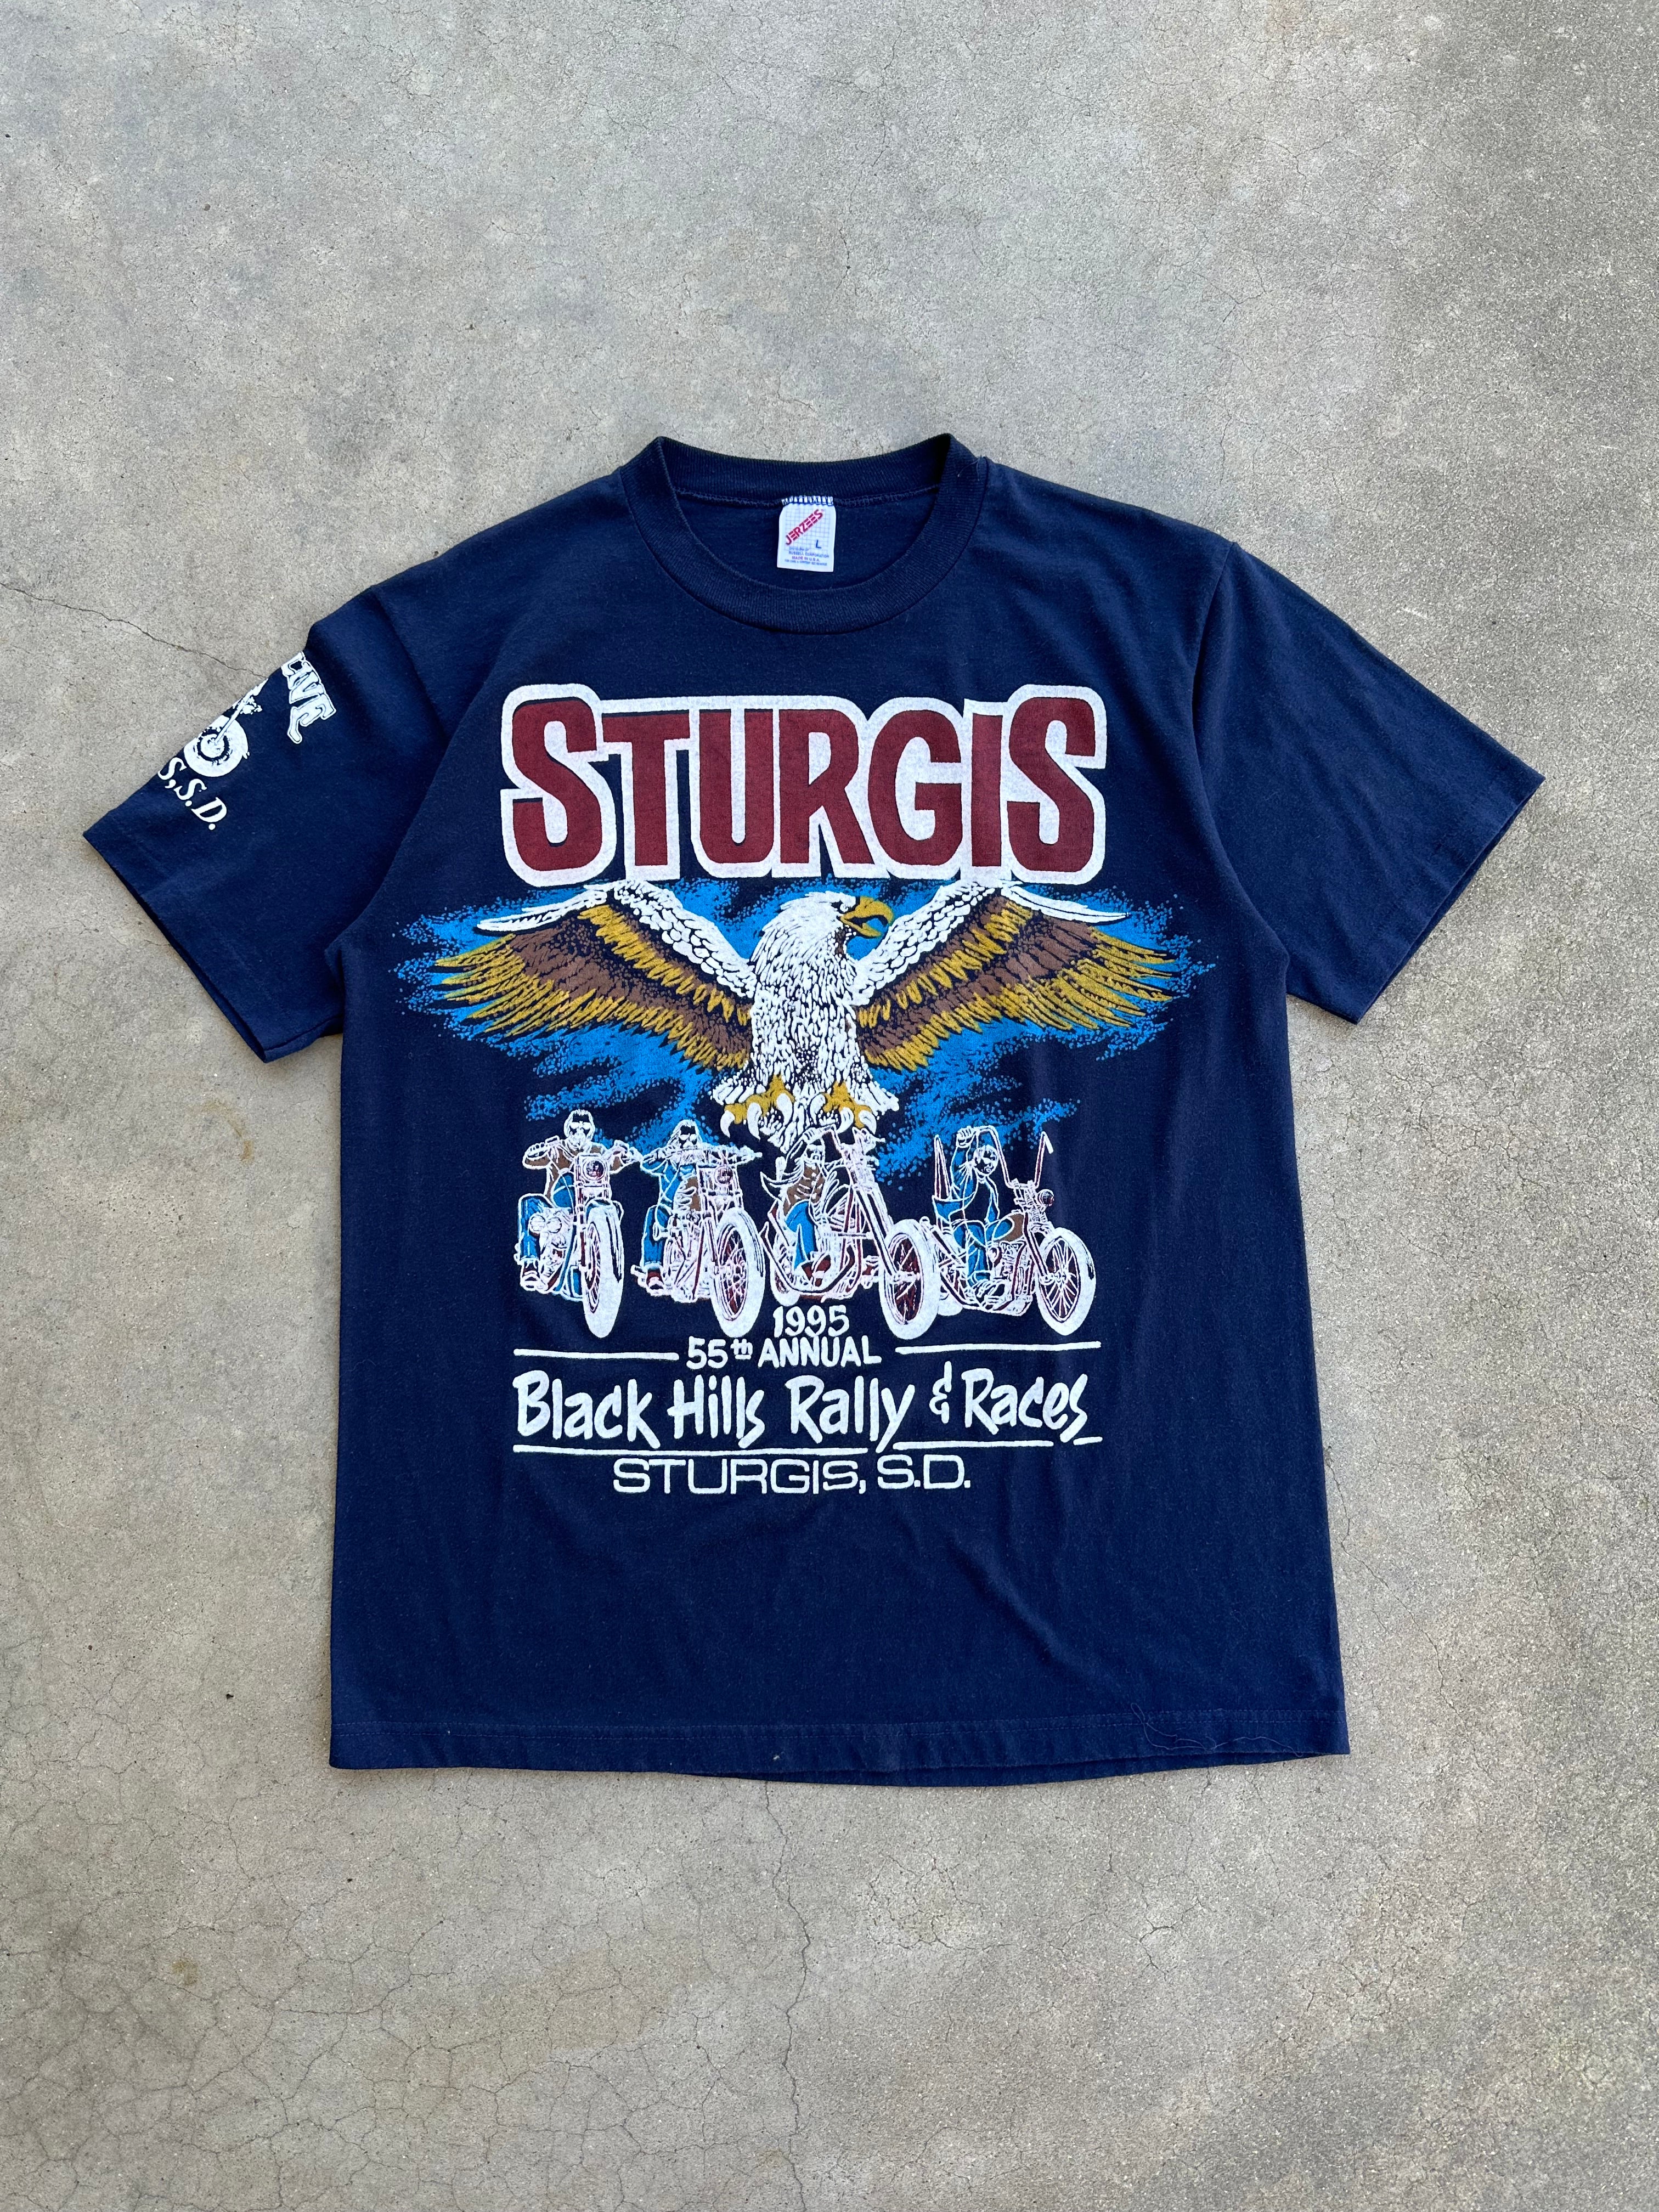 1995 Sturgis Black Hills Rally T-Shirt (M)